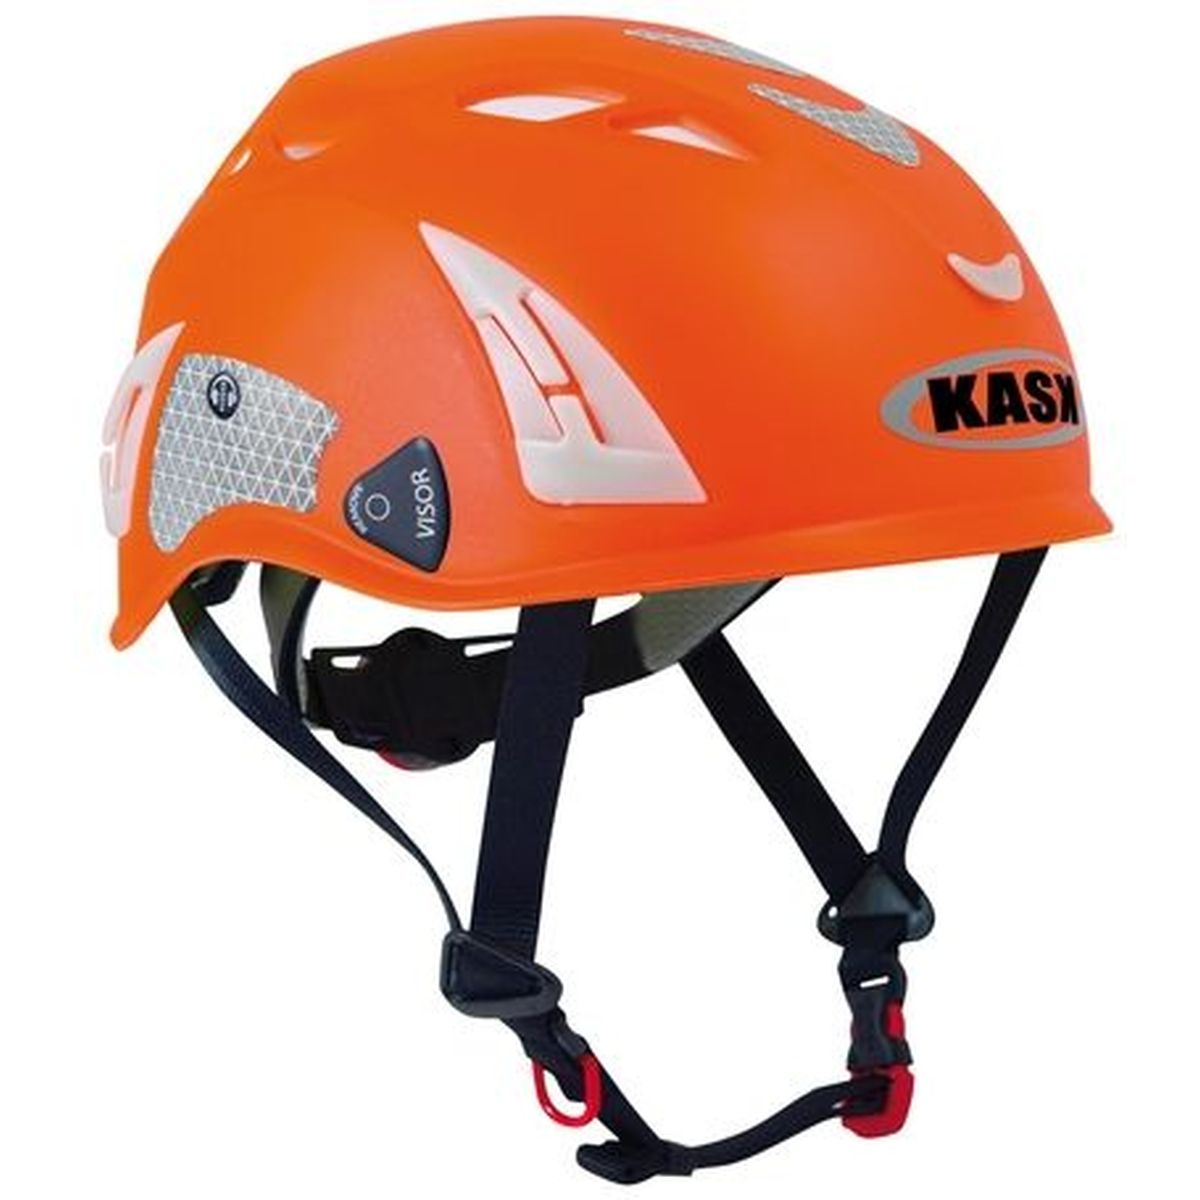 Helmet Plasma HI VIZ orange fluo KASK